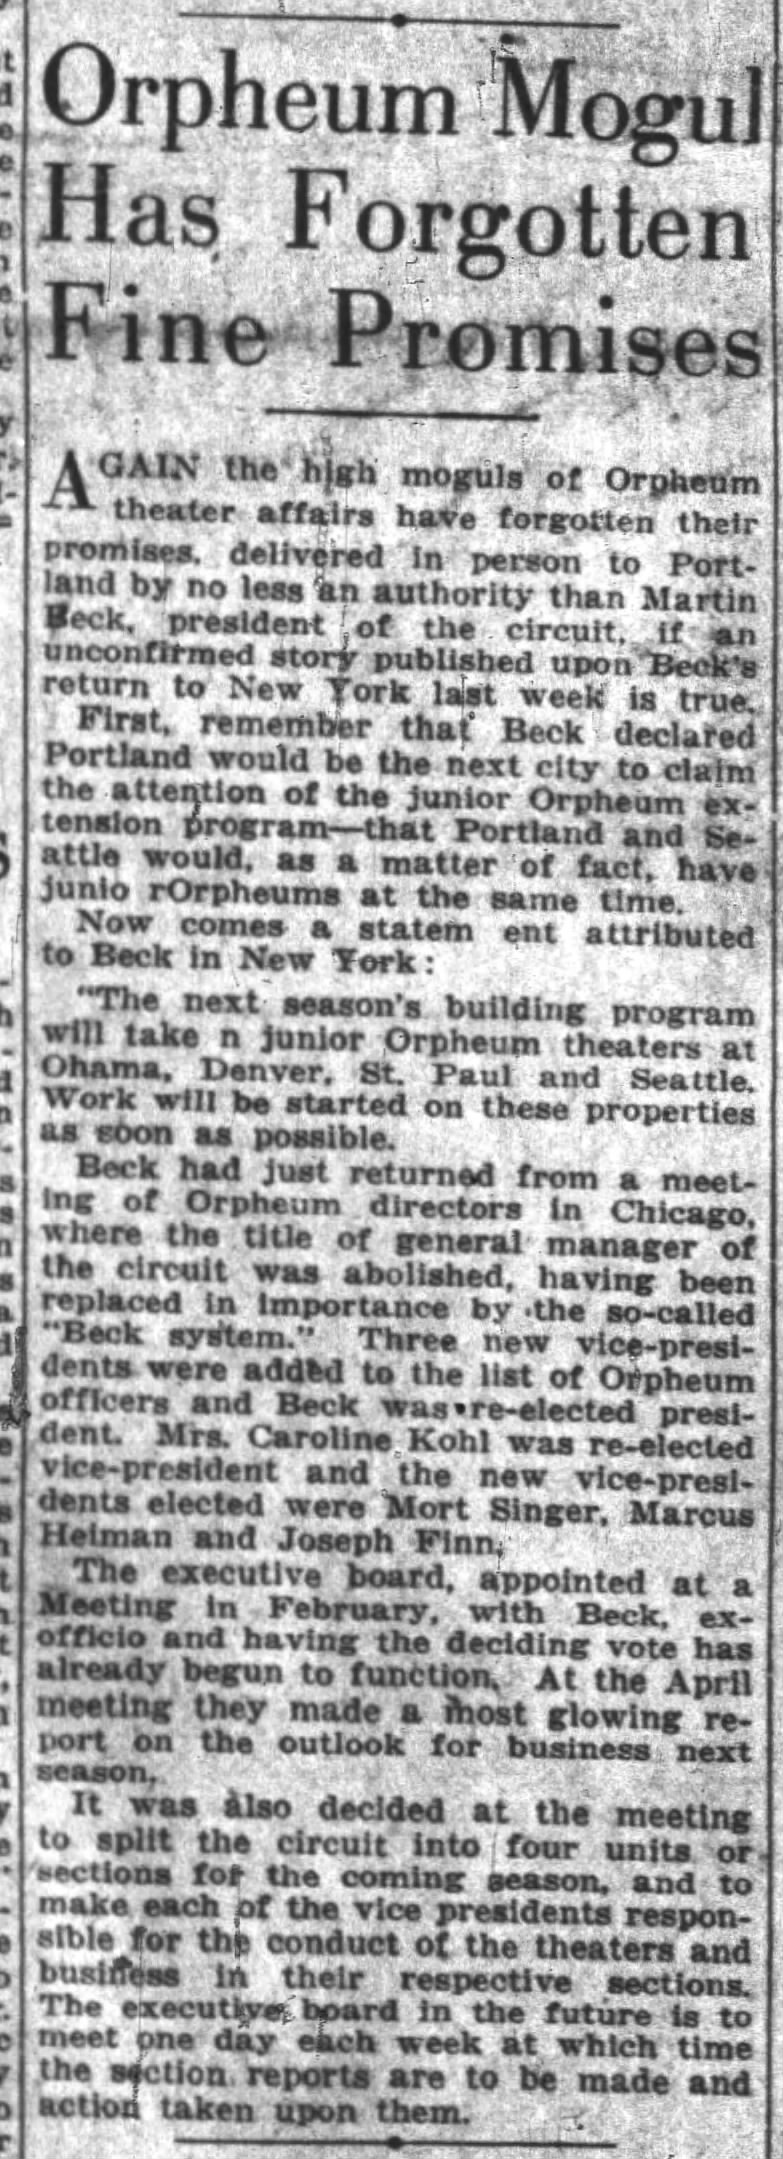 Caroline Kohl re-elected
Oregon Daily Journal - Portland
April 22, 1922, Page 51